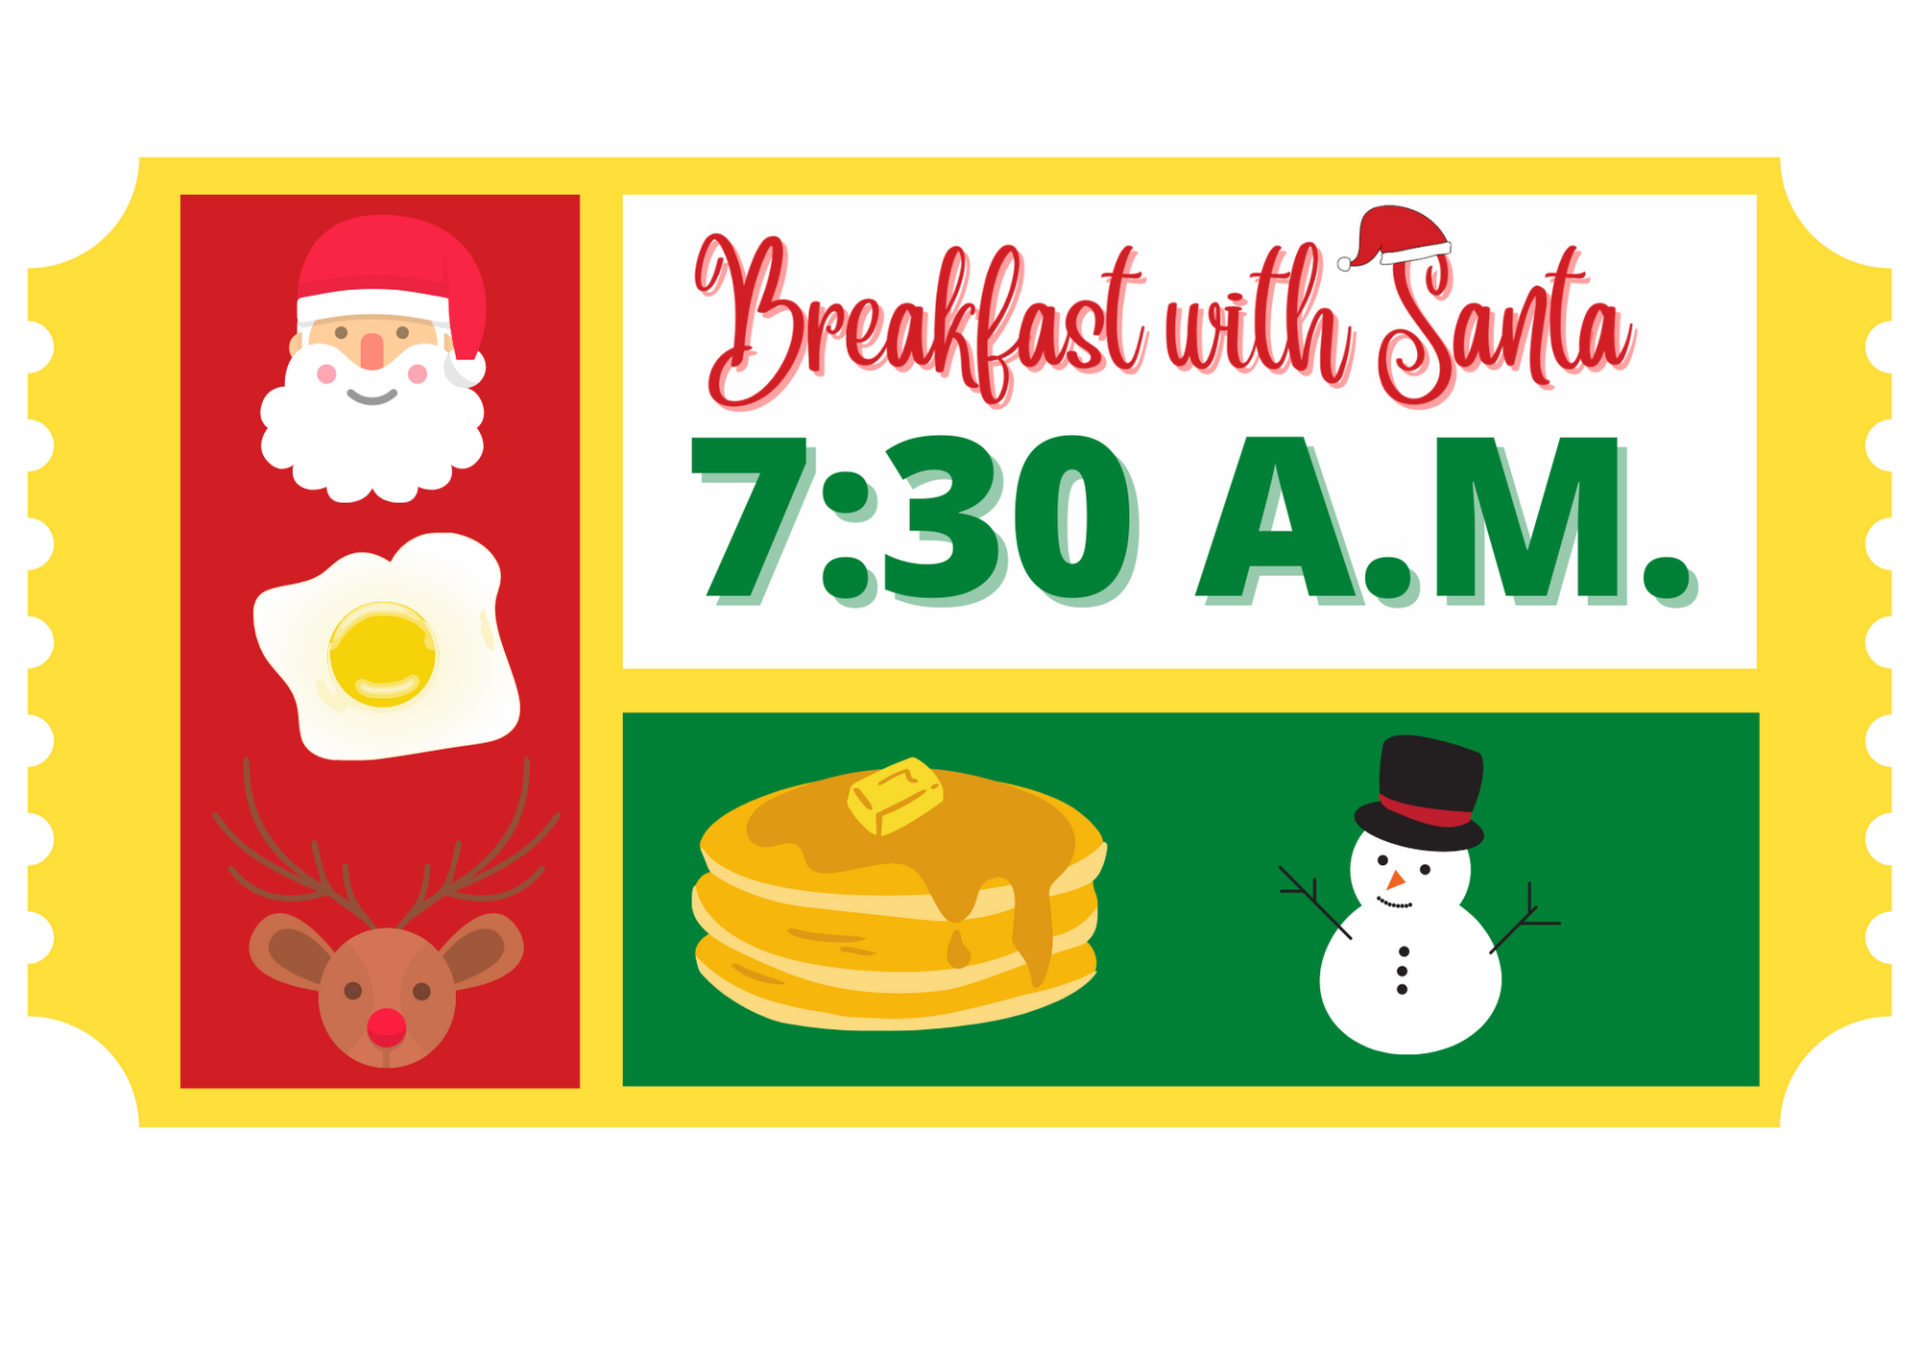 7:30 A.M. Breakfast with Santa